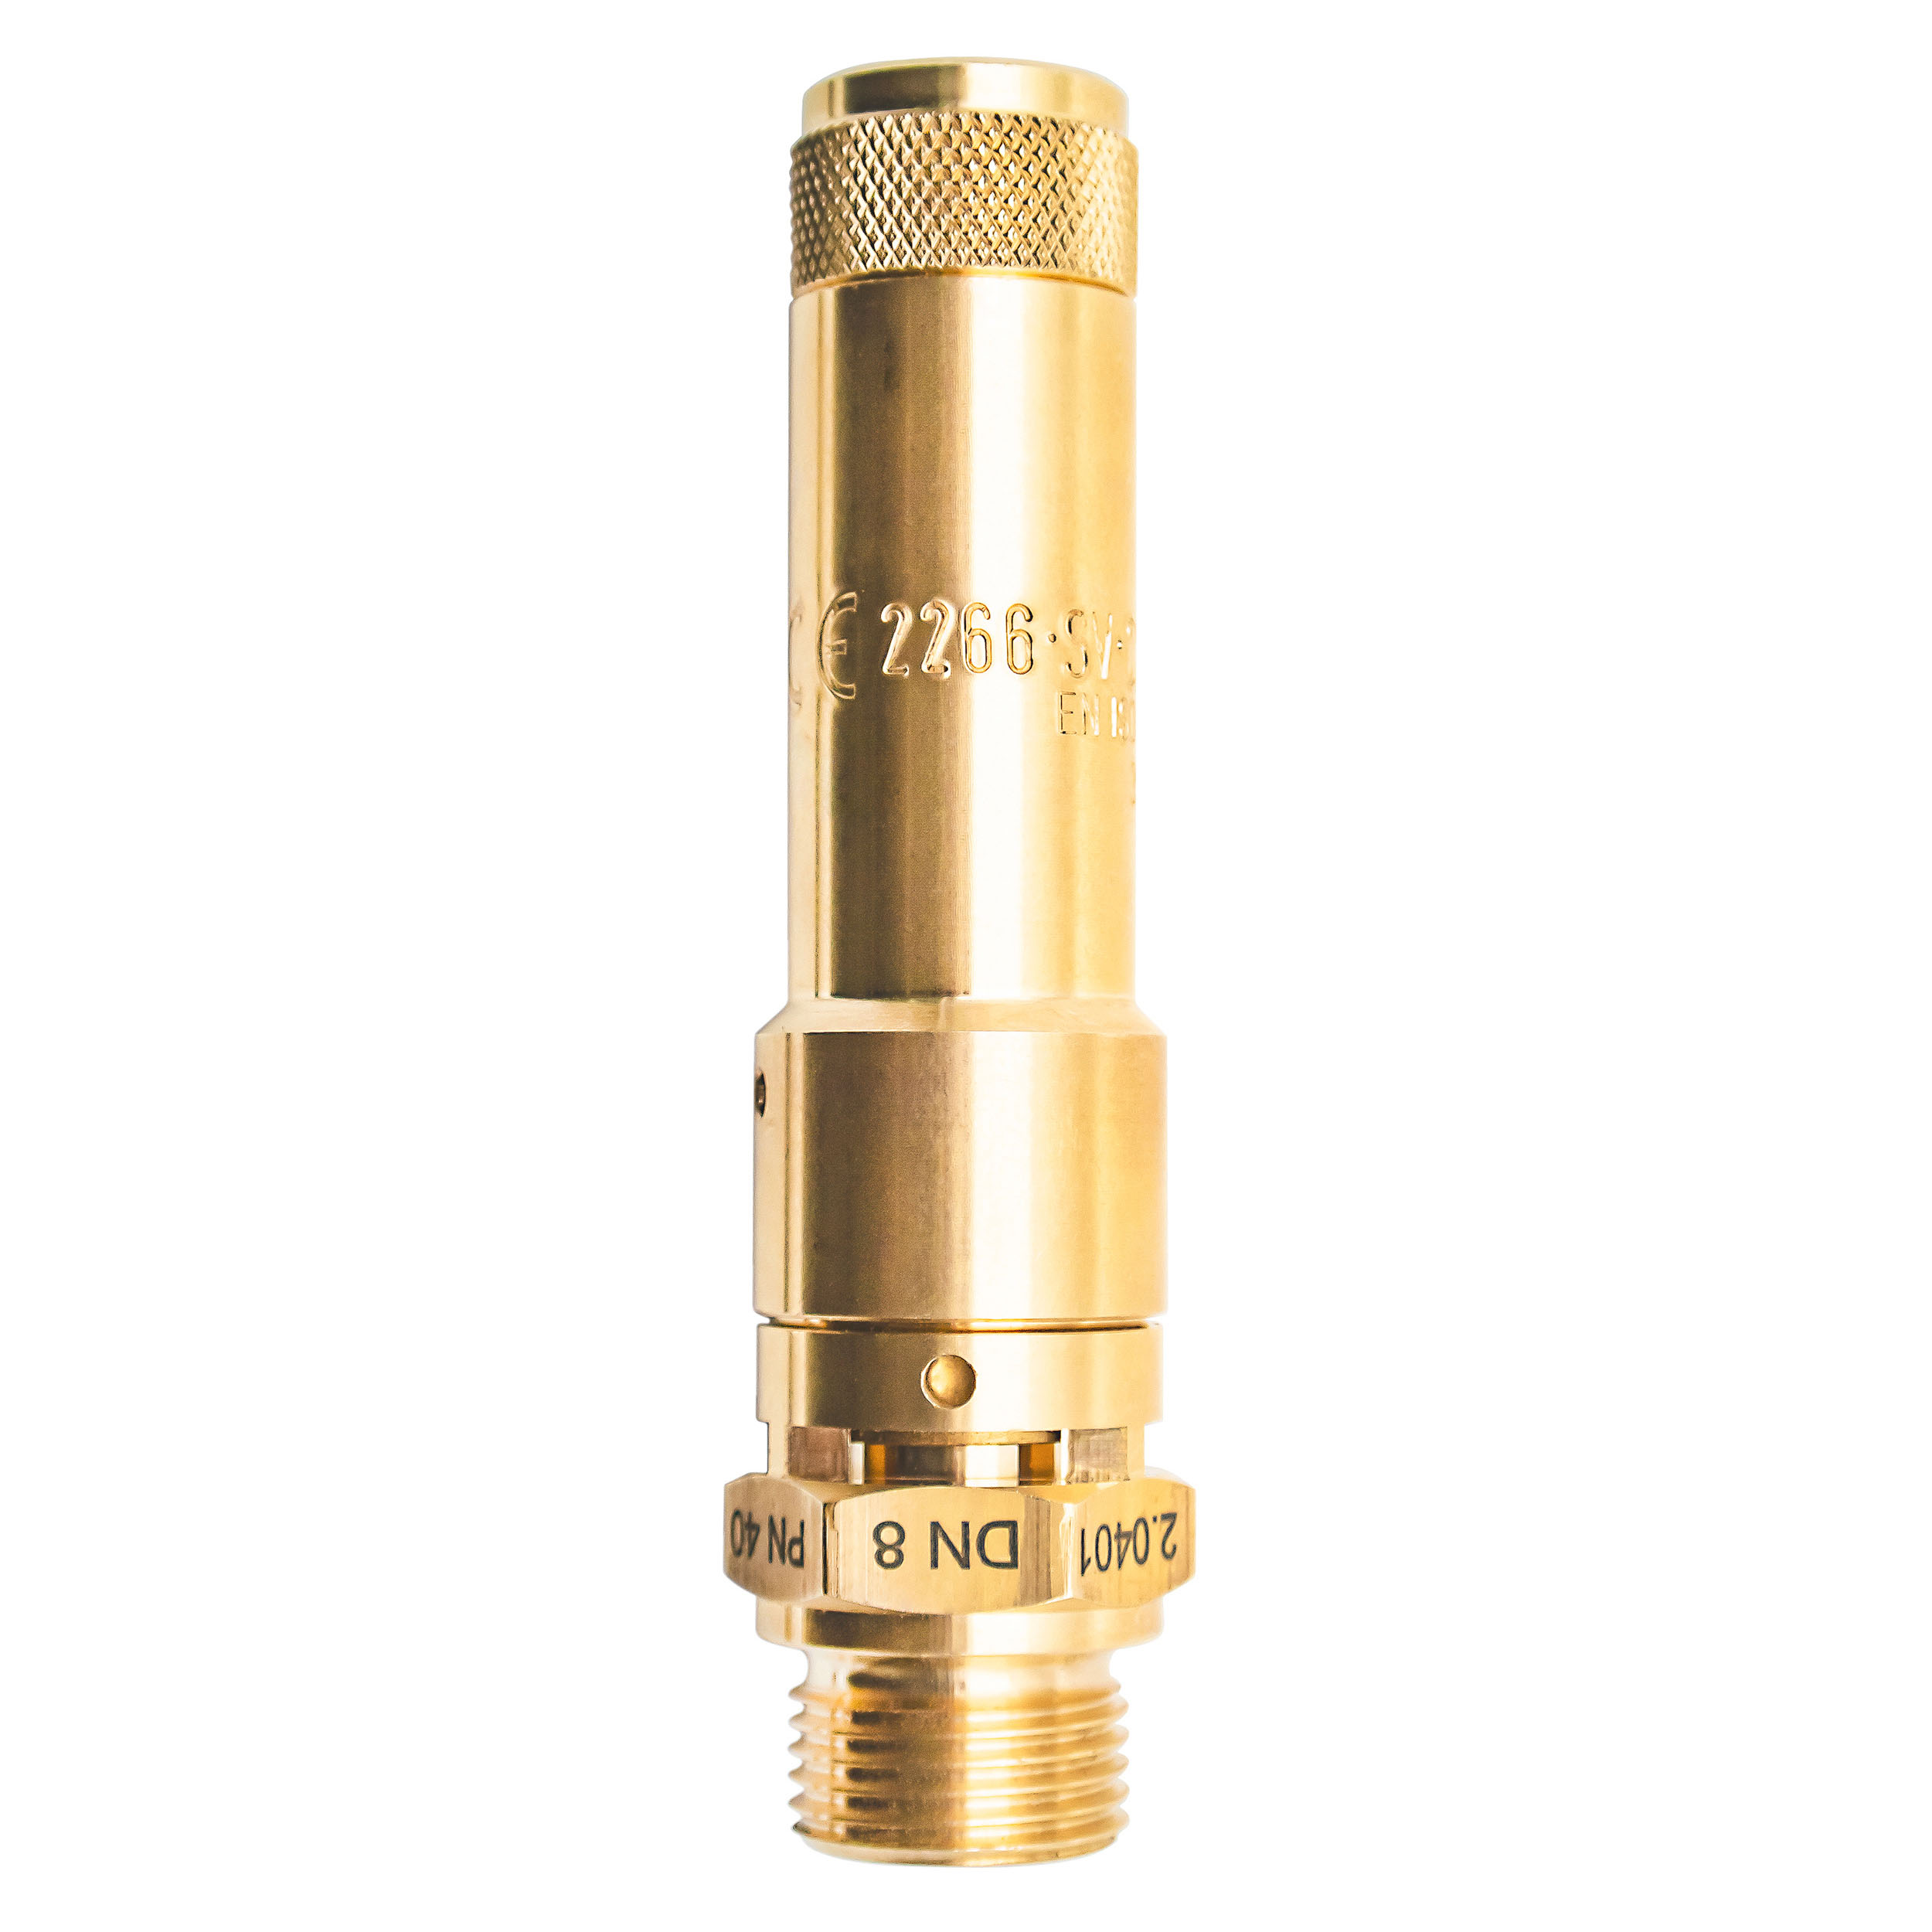 Component-tested safety valve DN 8, G½, pressure: 1-1.5 bar